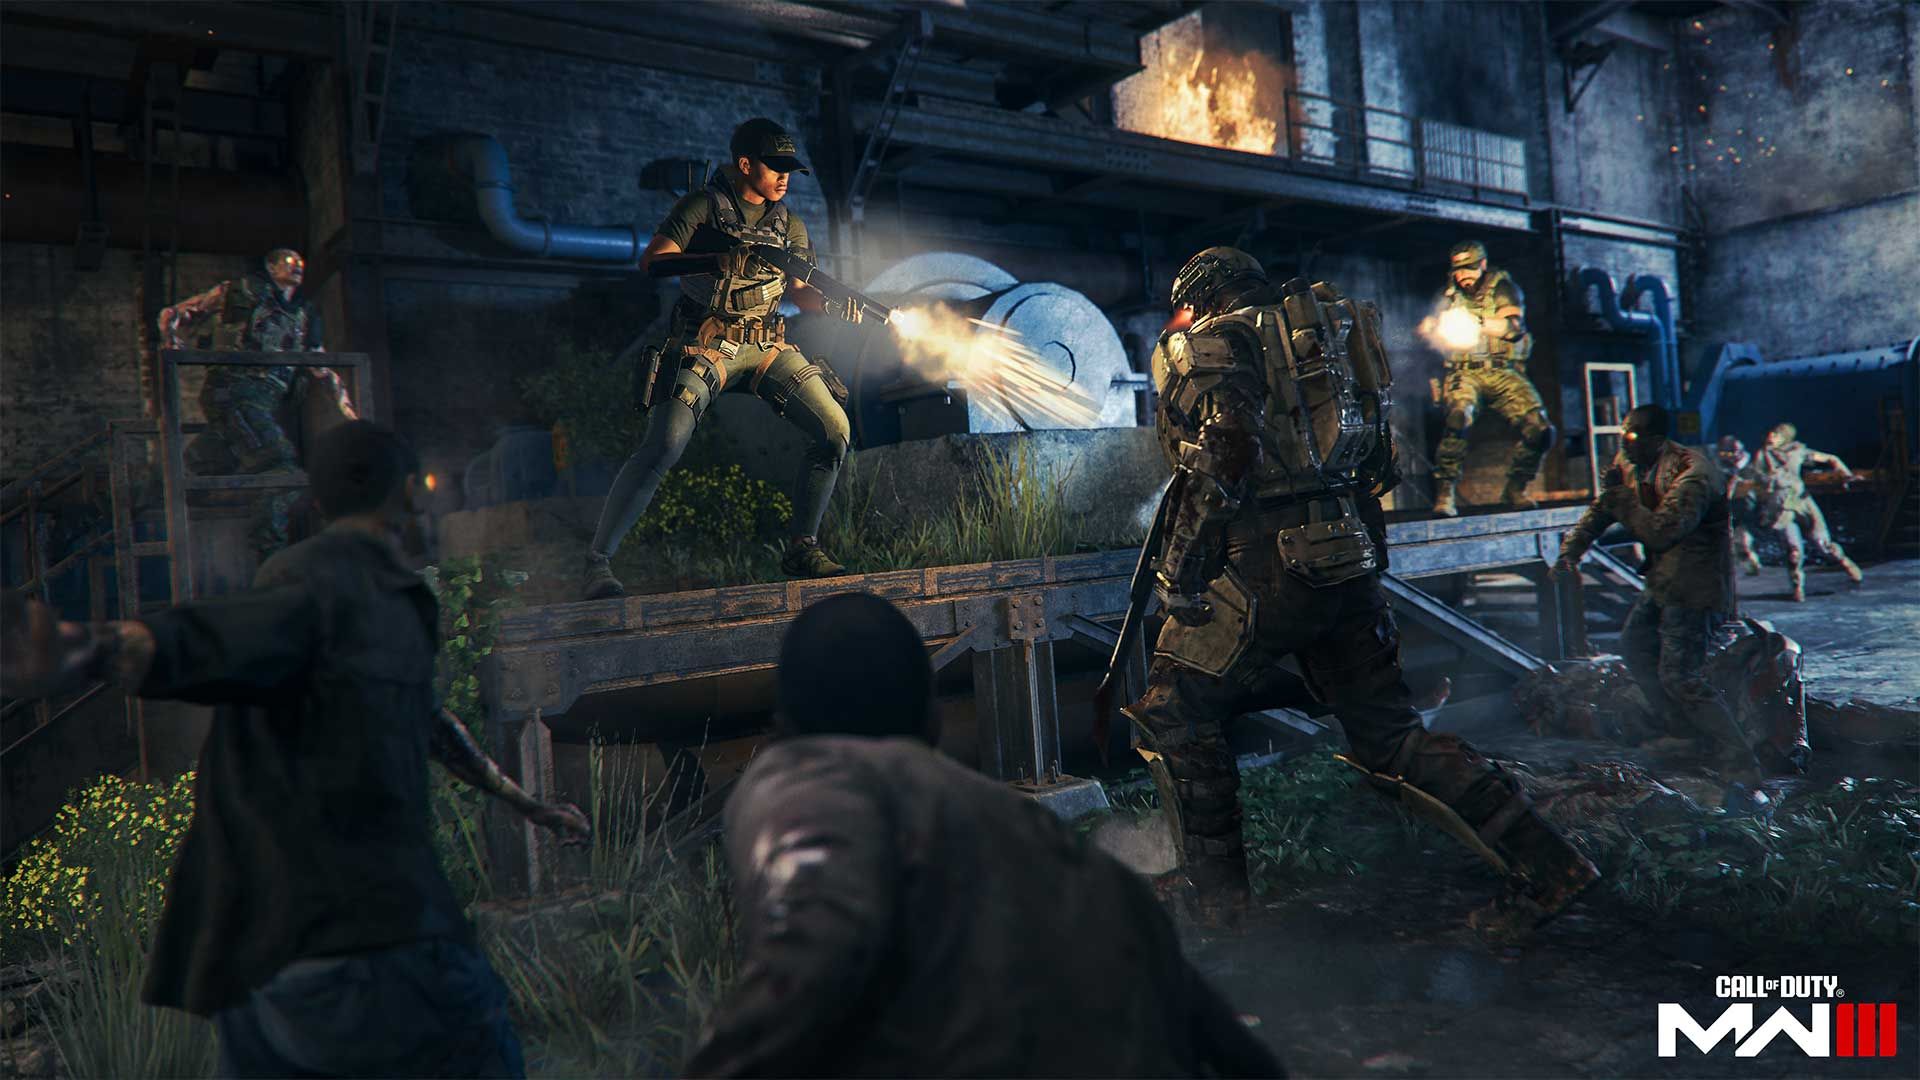 Modern Warfare 3 zombies ray gun - how to get